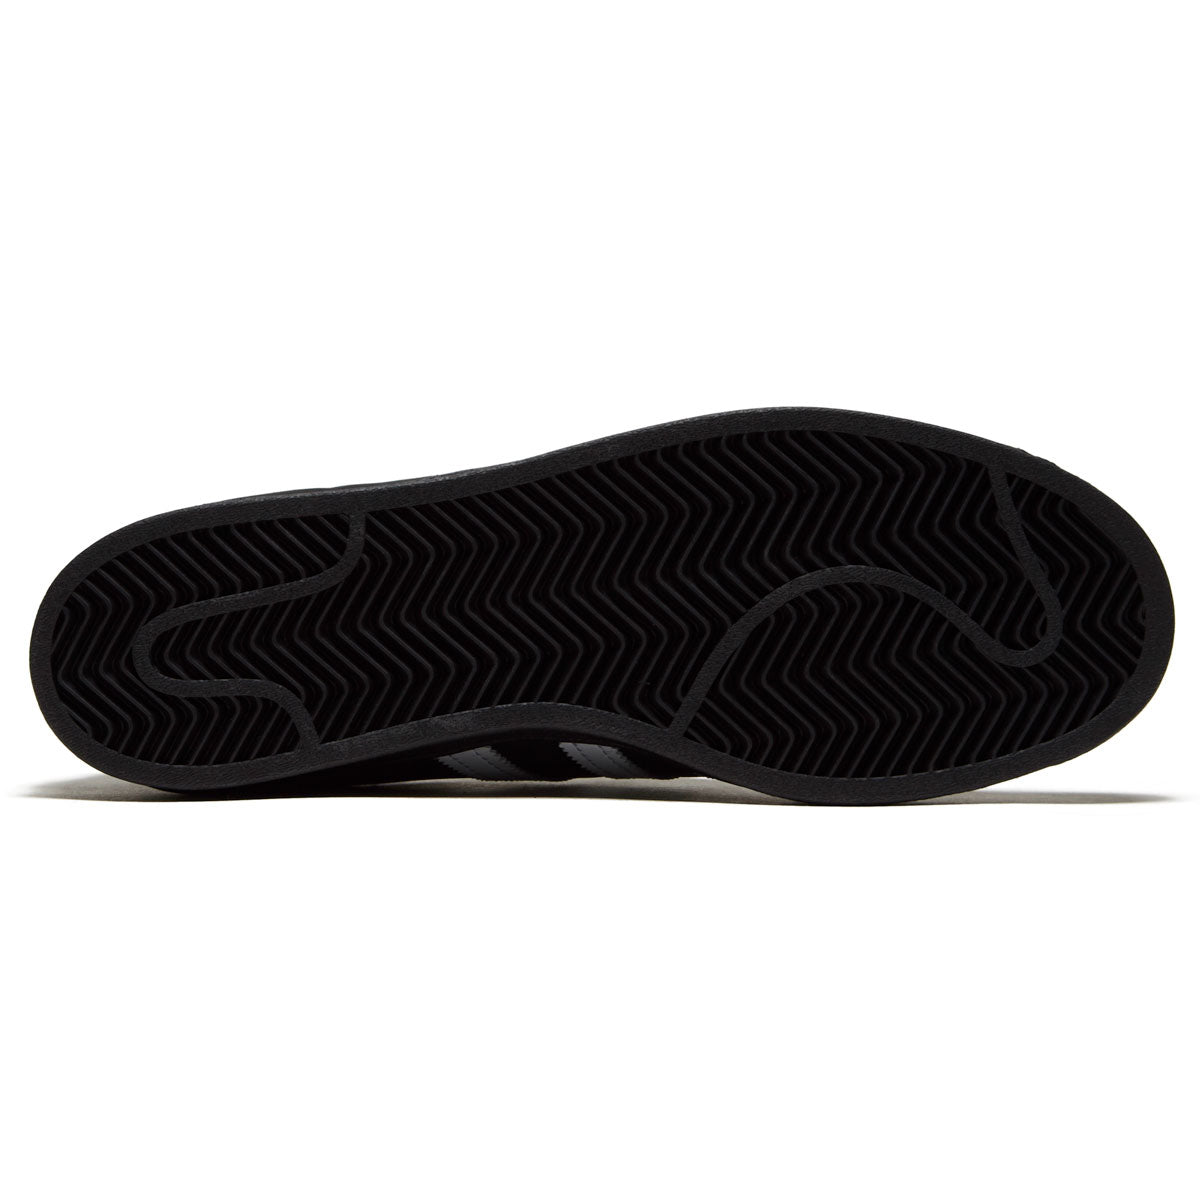 Adidas Superstar Adv Shoes - Black/White/Gold Metallic image 4